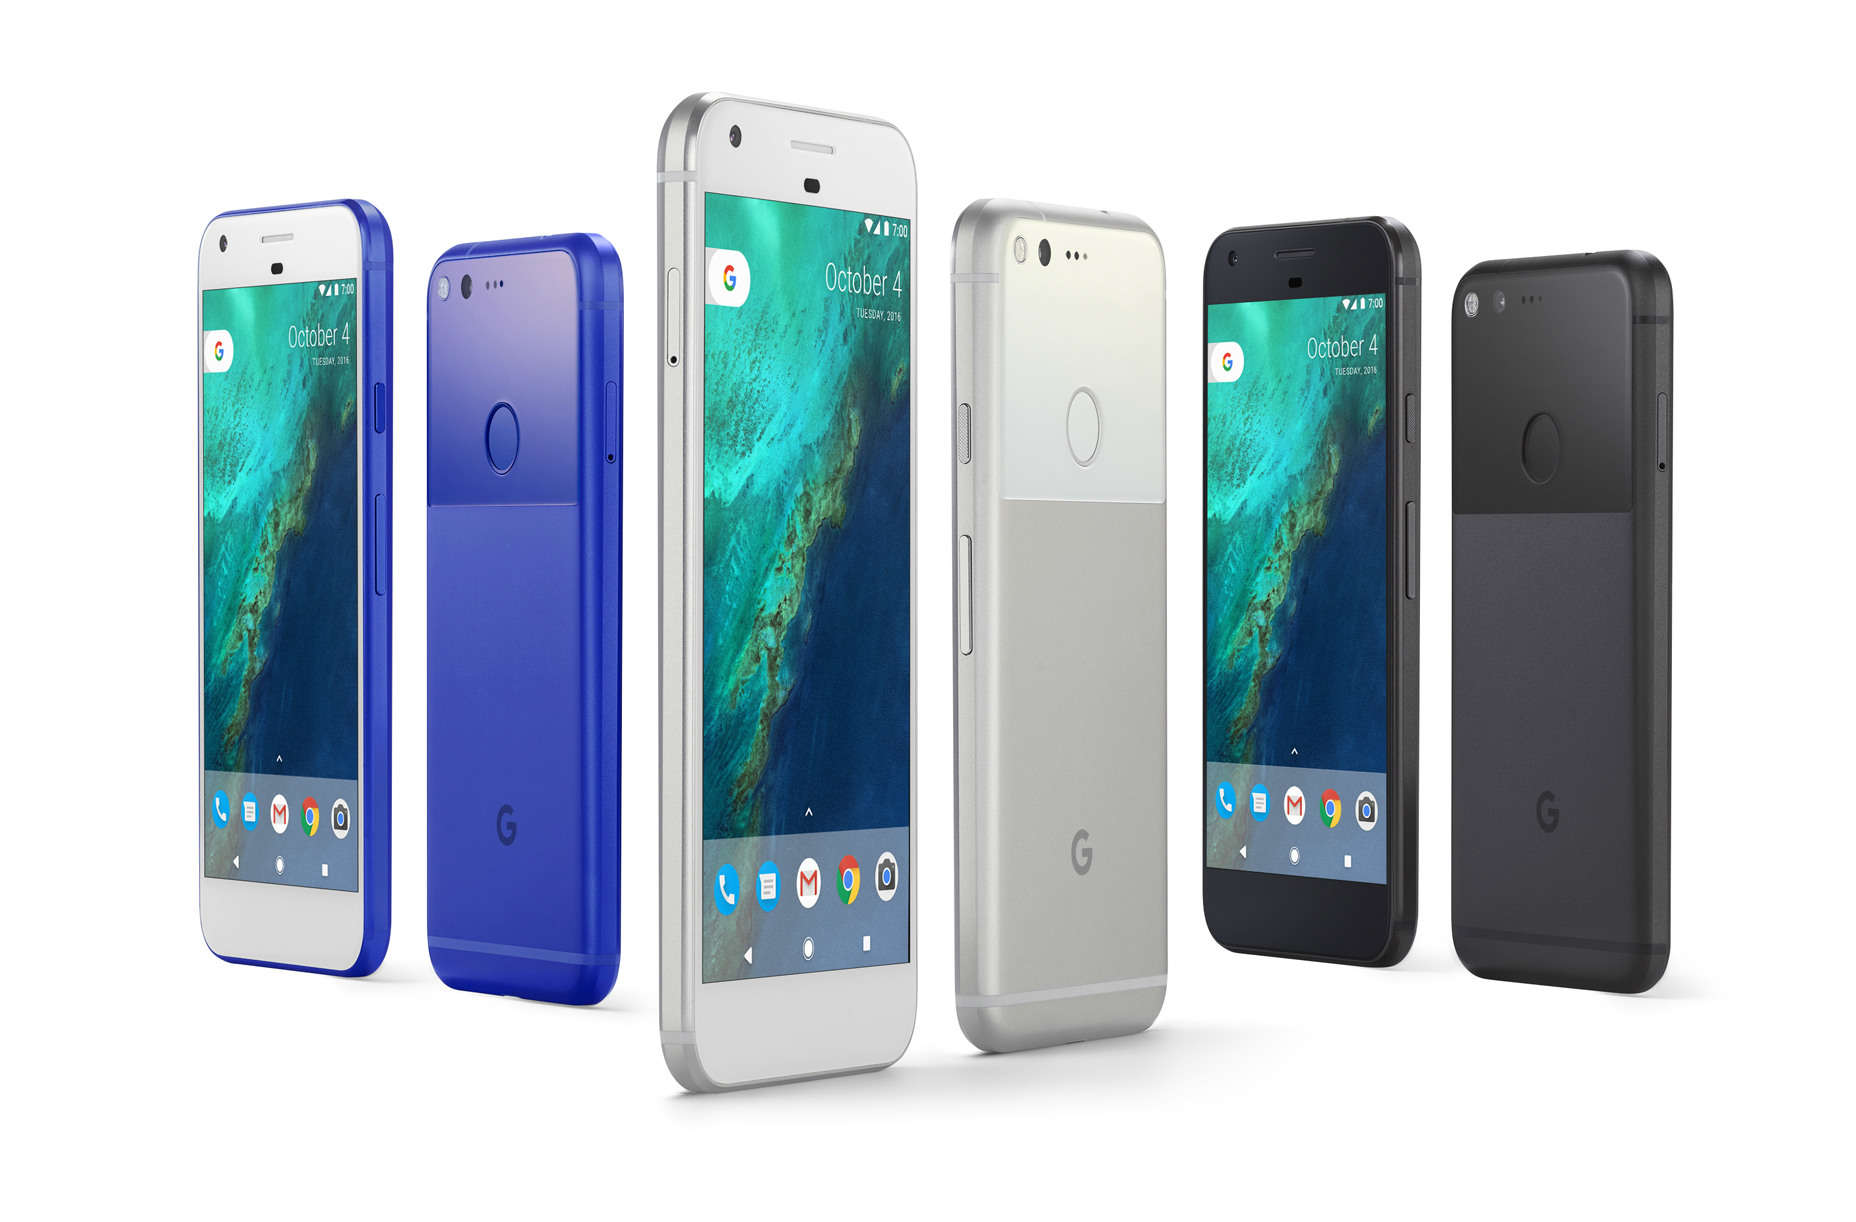 Google Pixel phone family